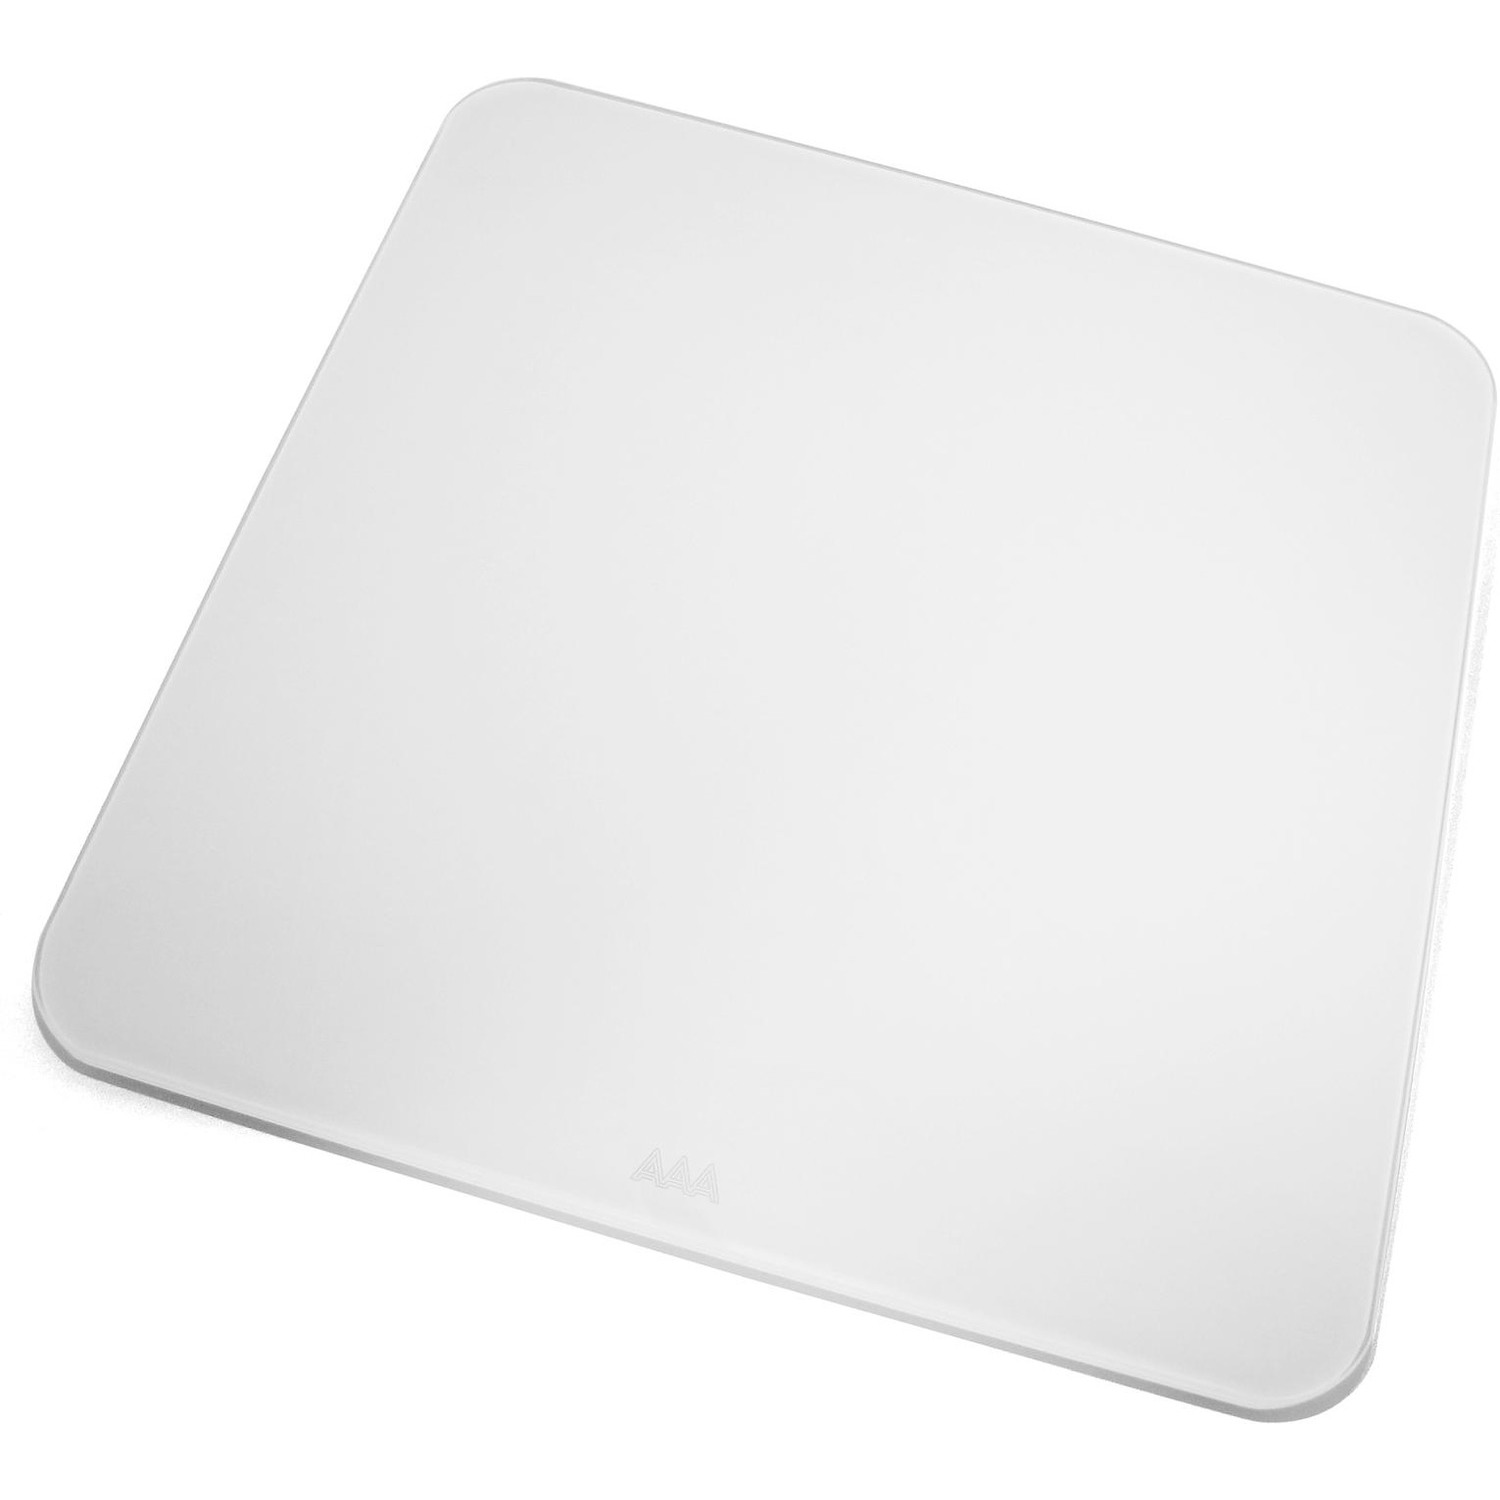 Immagine per Bilancia pesapersone AAAmaze AMBS0002W Body Scale display led capacita' 180kg white bianco da DIMOStore